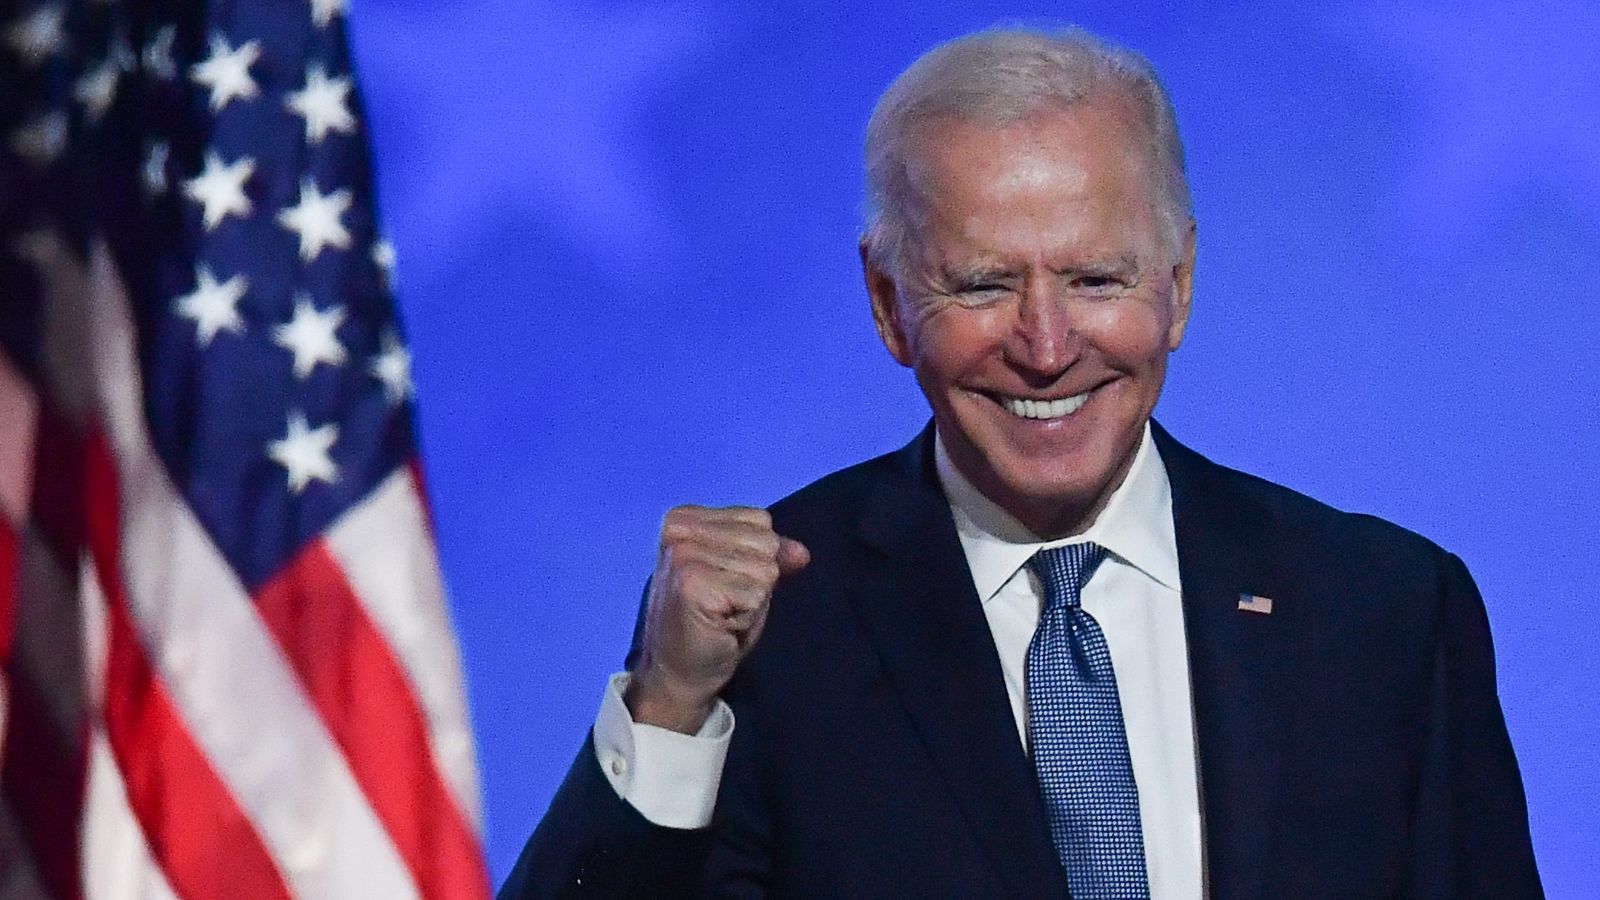 US election results confirms Joe Biden beat Donald Trump to